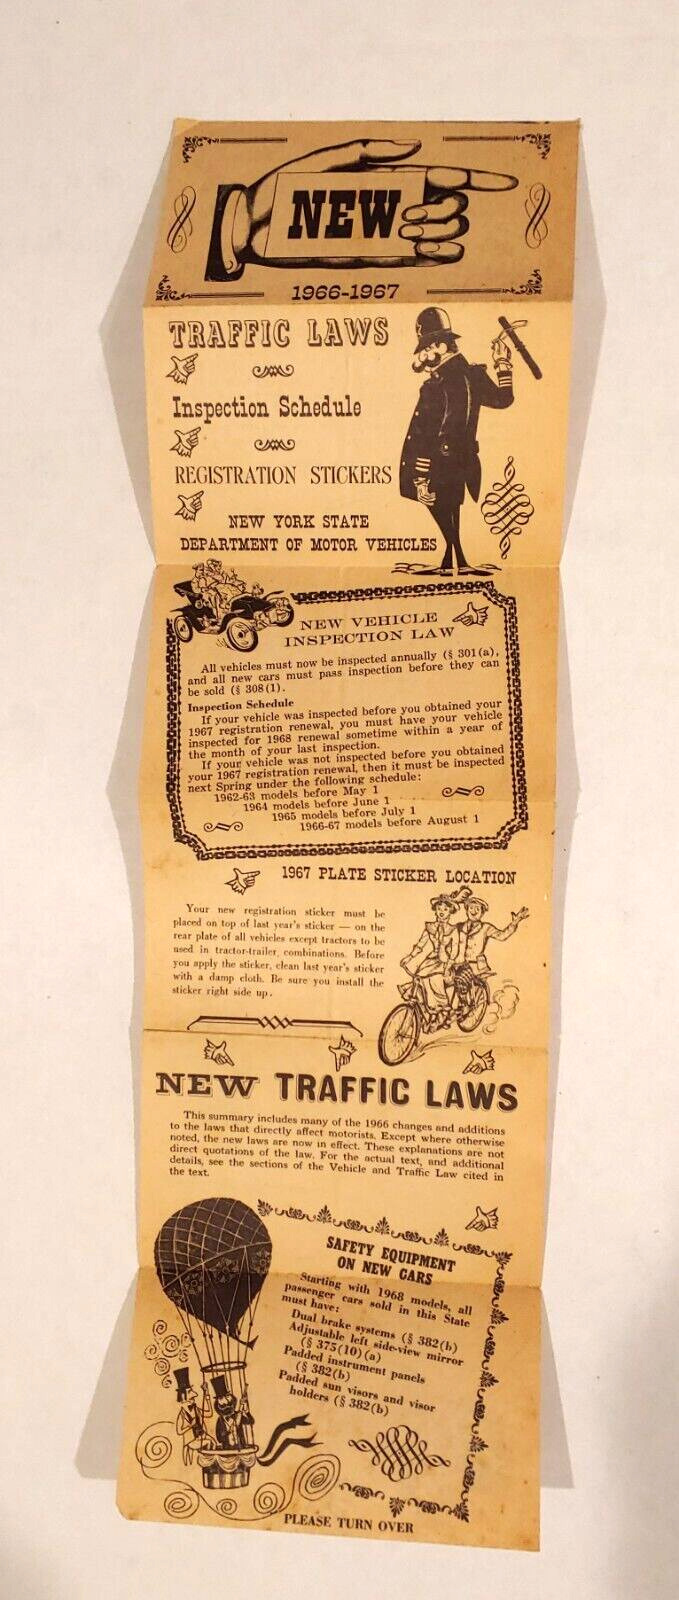 RARE “NEW 1966-1967 TRAFFIC LAWS\